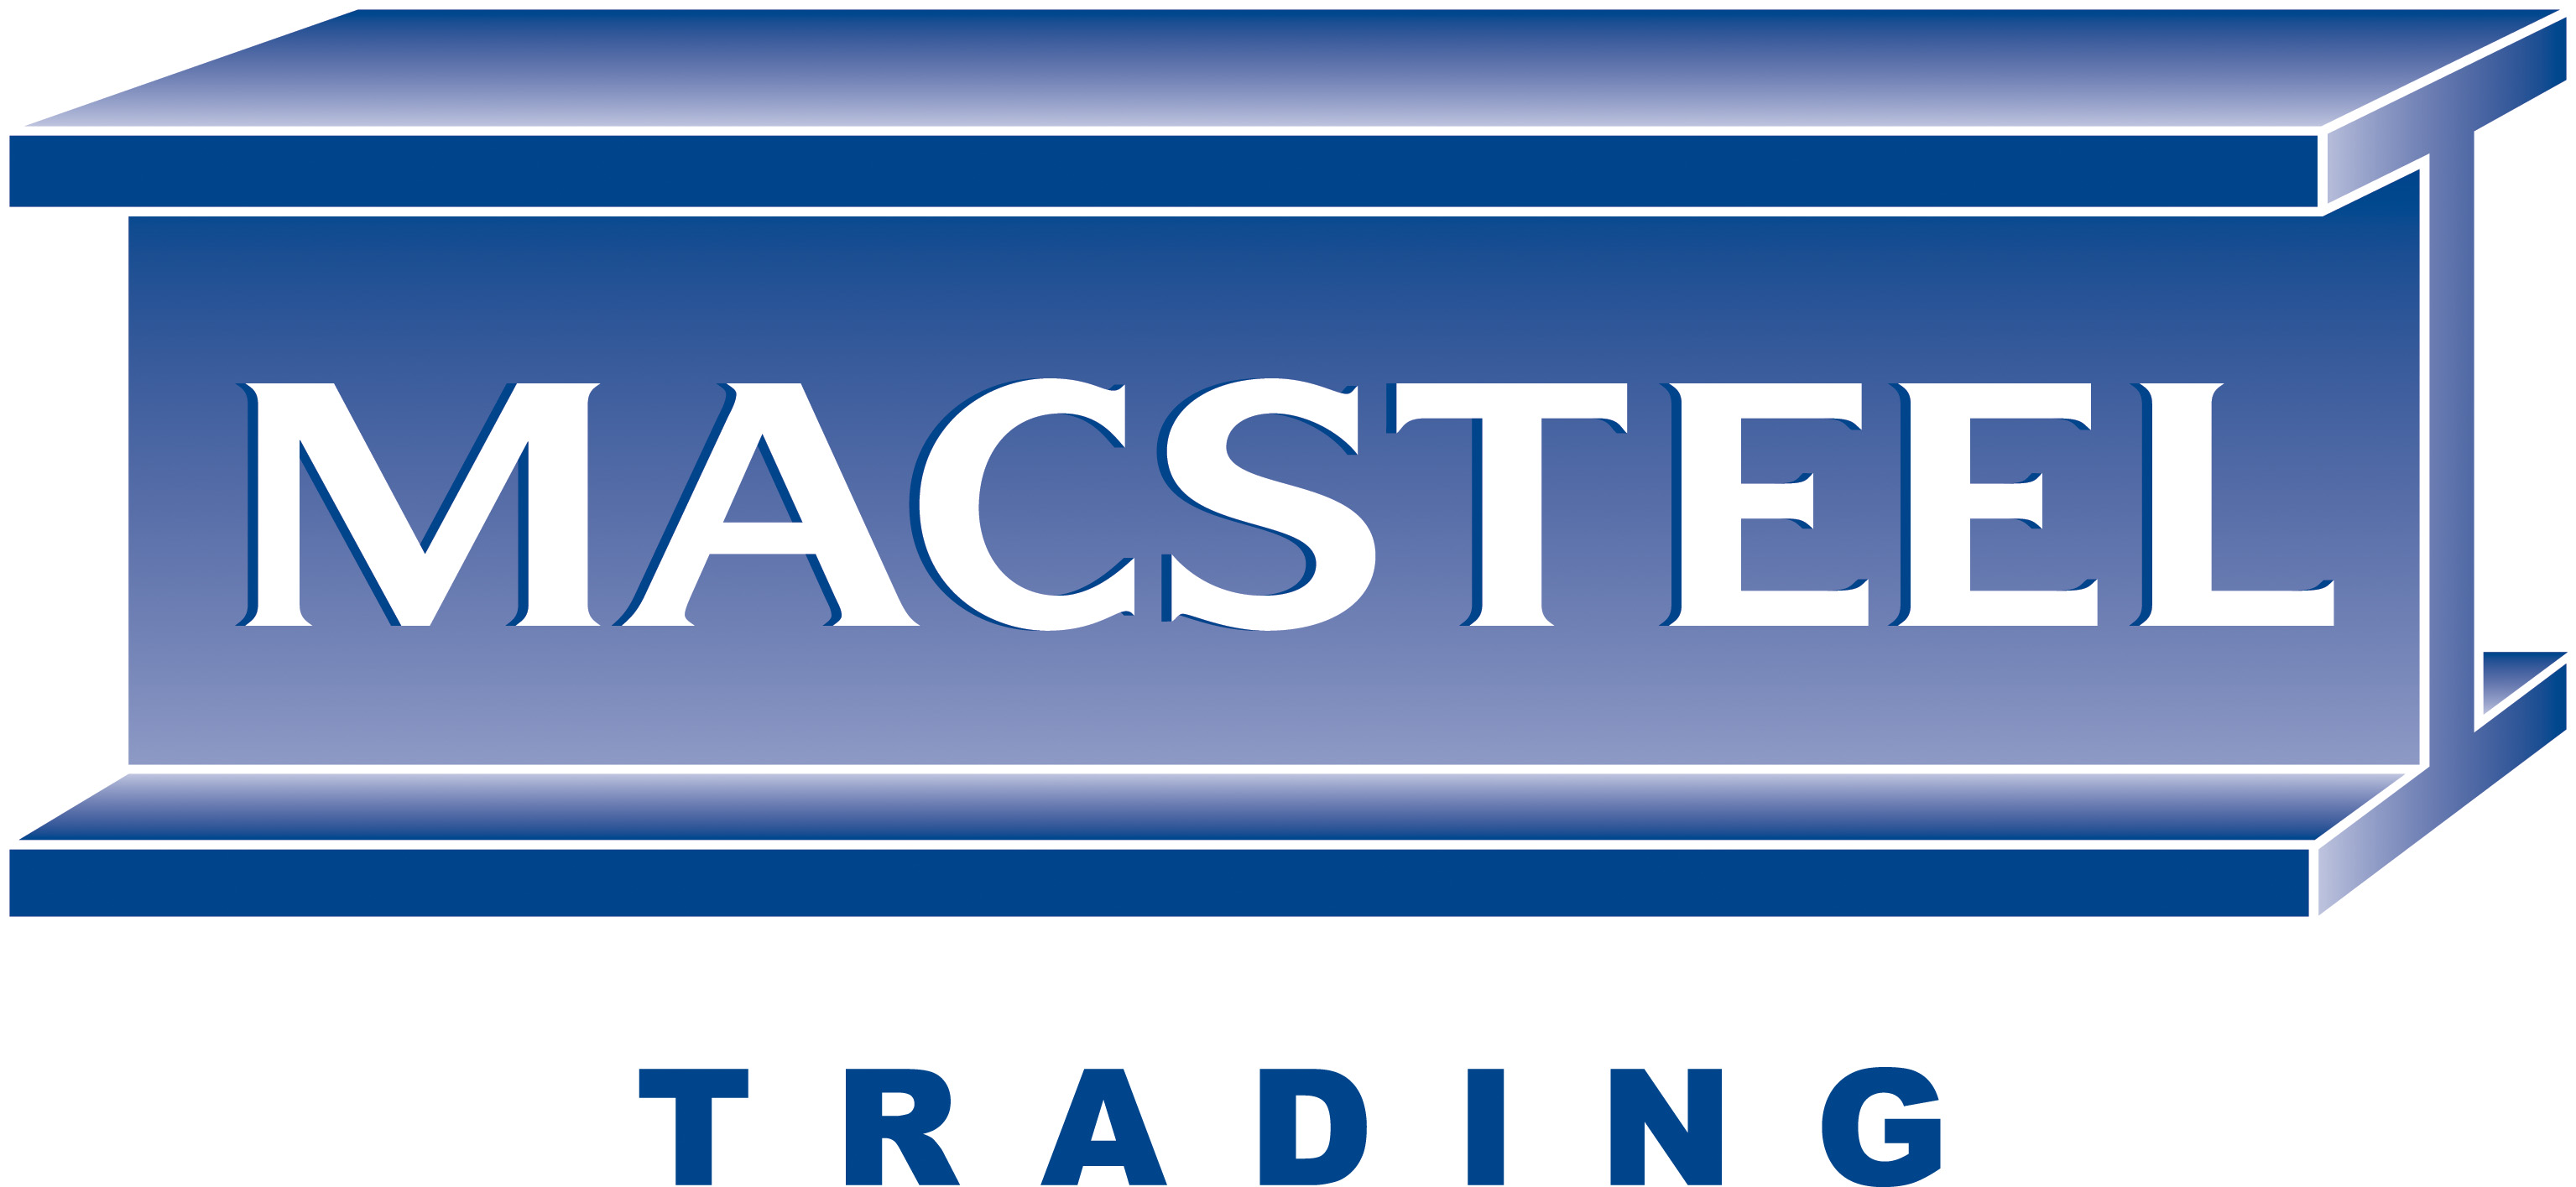 Macsteel Trading - Port Shepstone logo